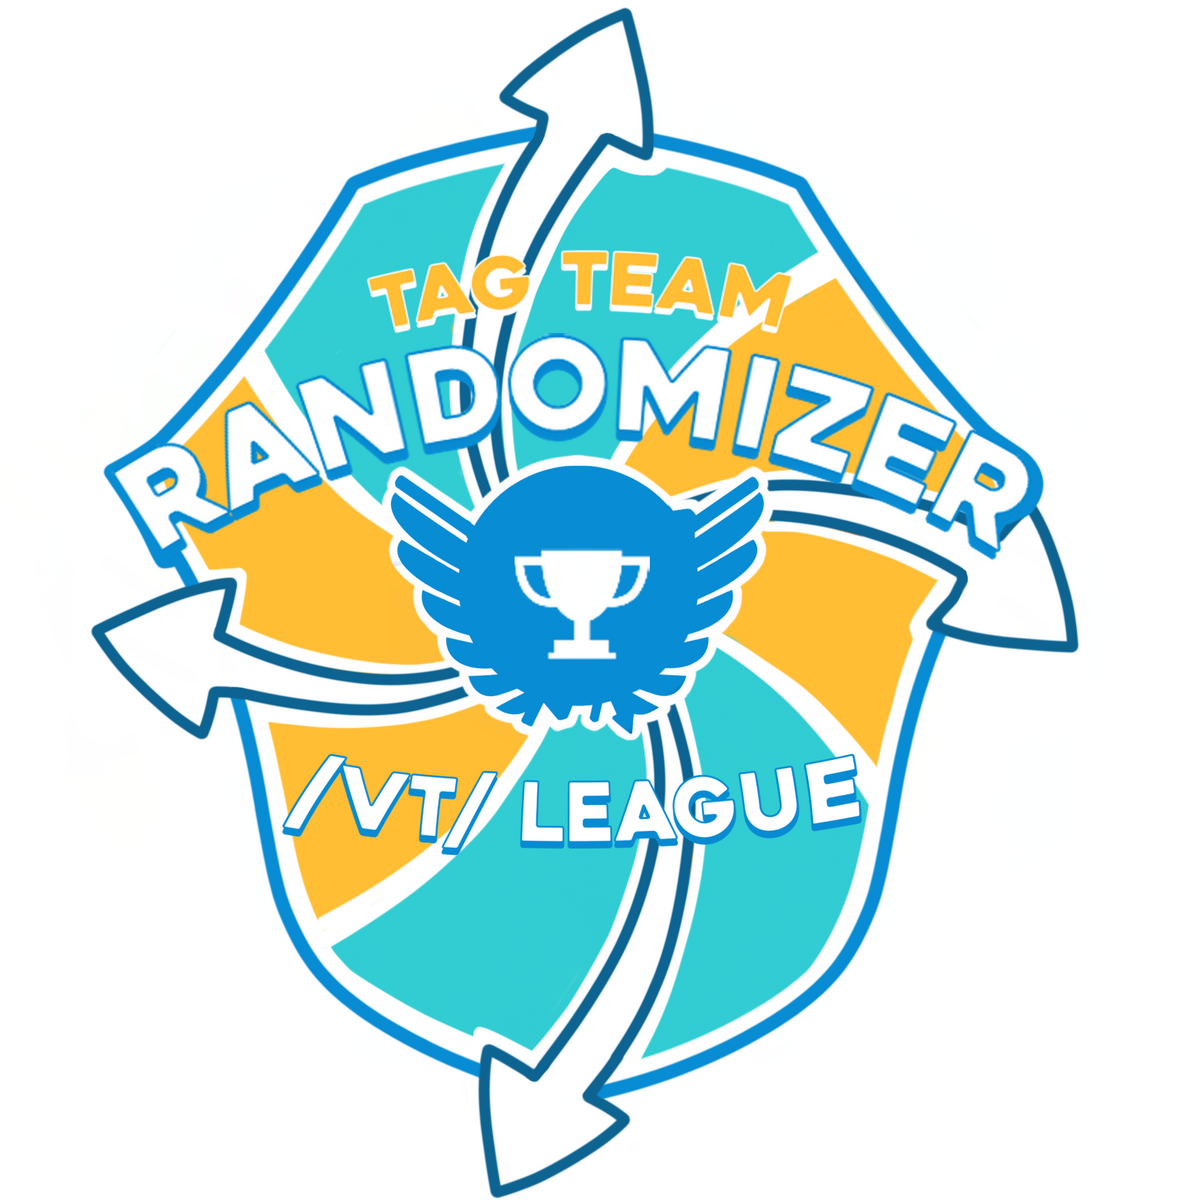 /vt/ League Randomized Tag Team Cup